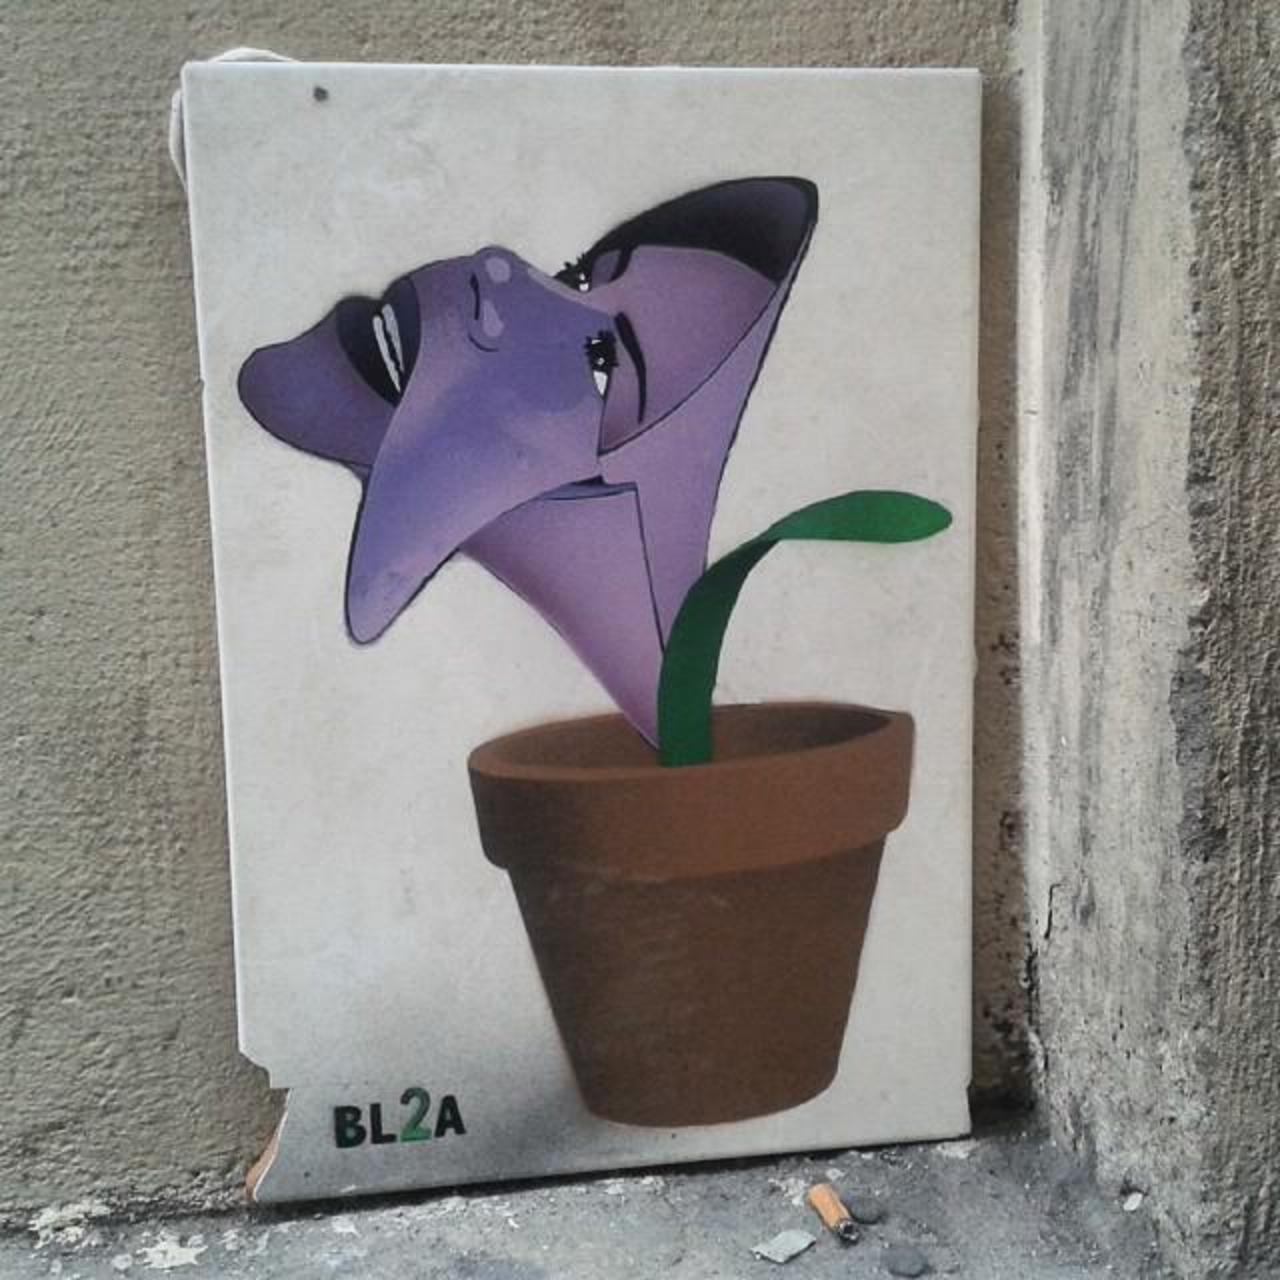 #bl2a = #baldosa #streetart o #graffiti ? #postgraffiti #streetartbcn #streetartbarcelona #stencil #stencilart #bar… http://t.co/rK1UrAvqFG